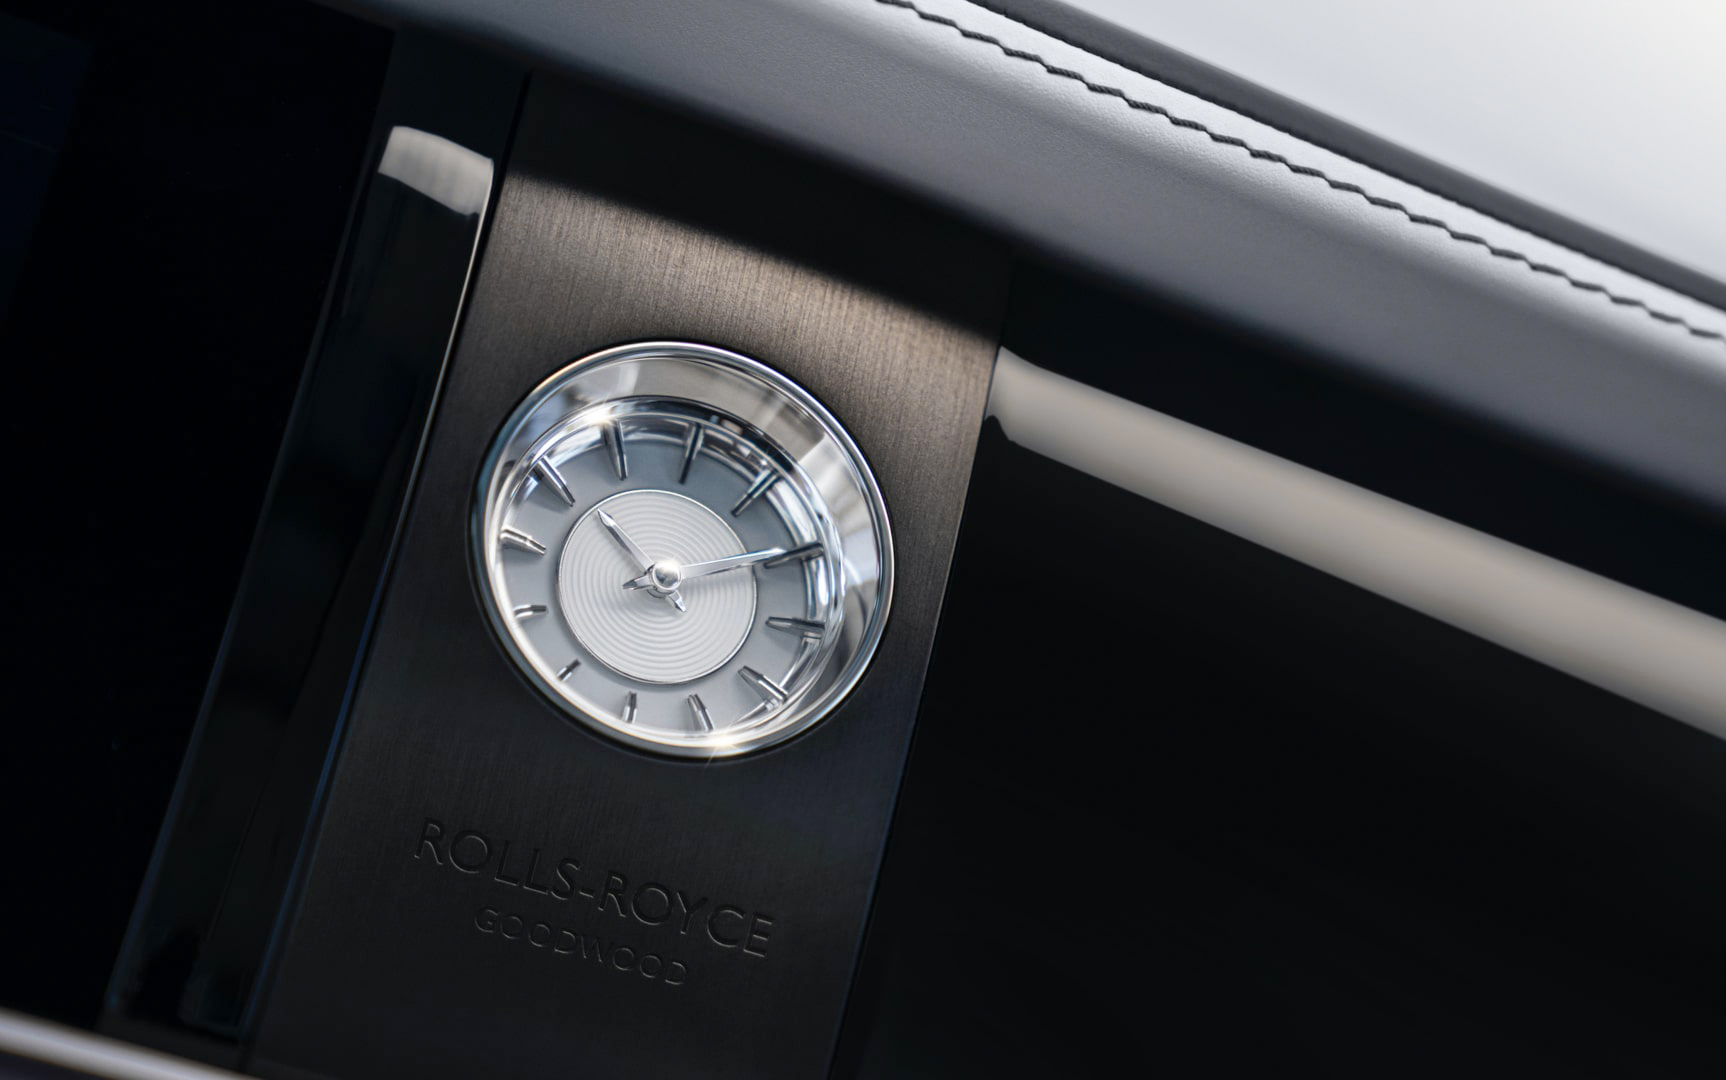 Rolls-Royce clock